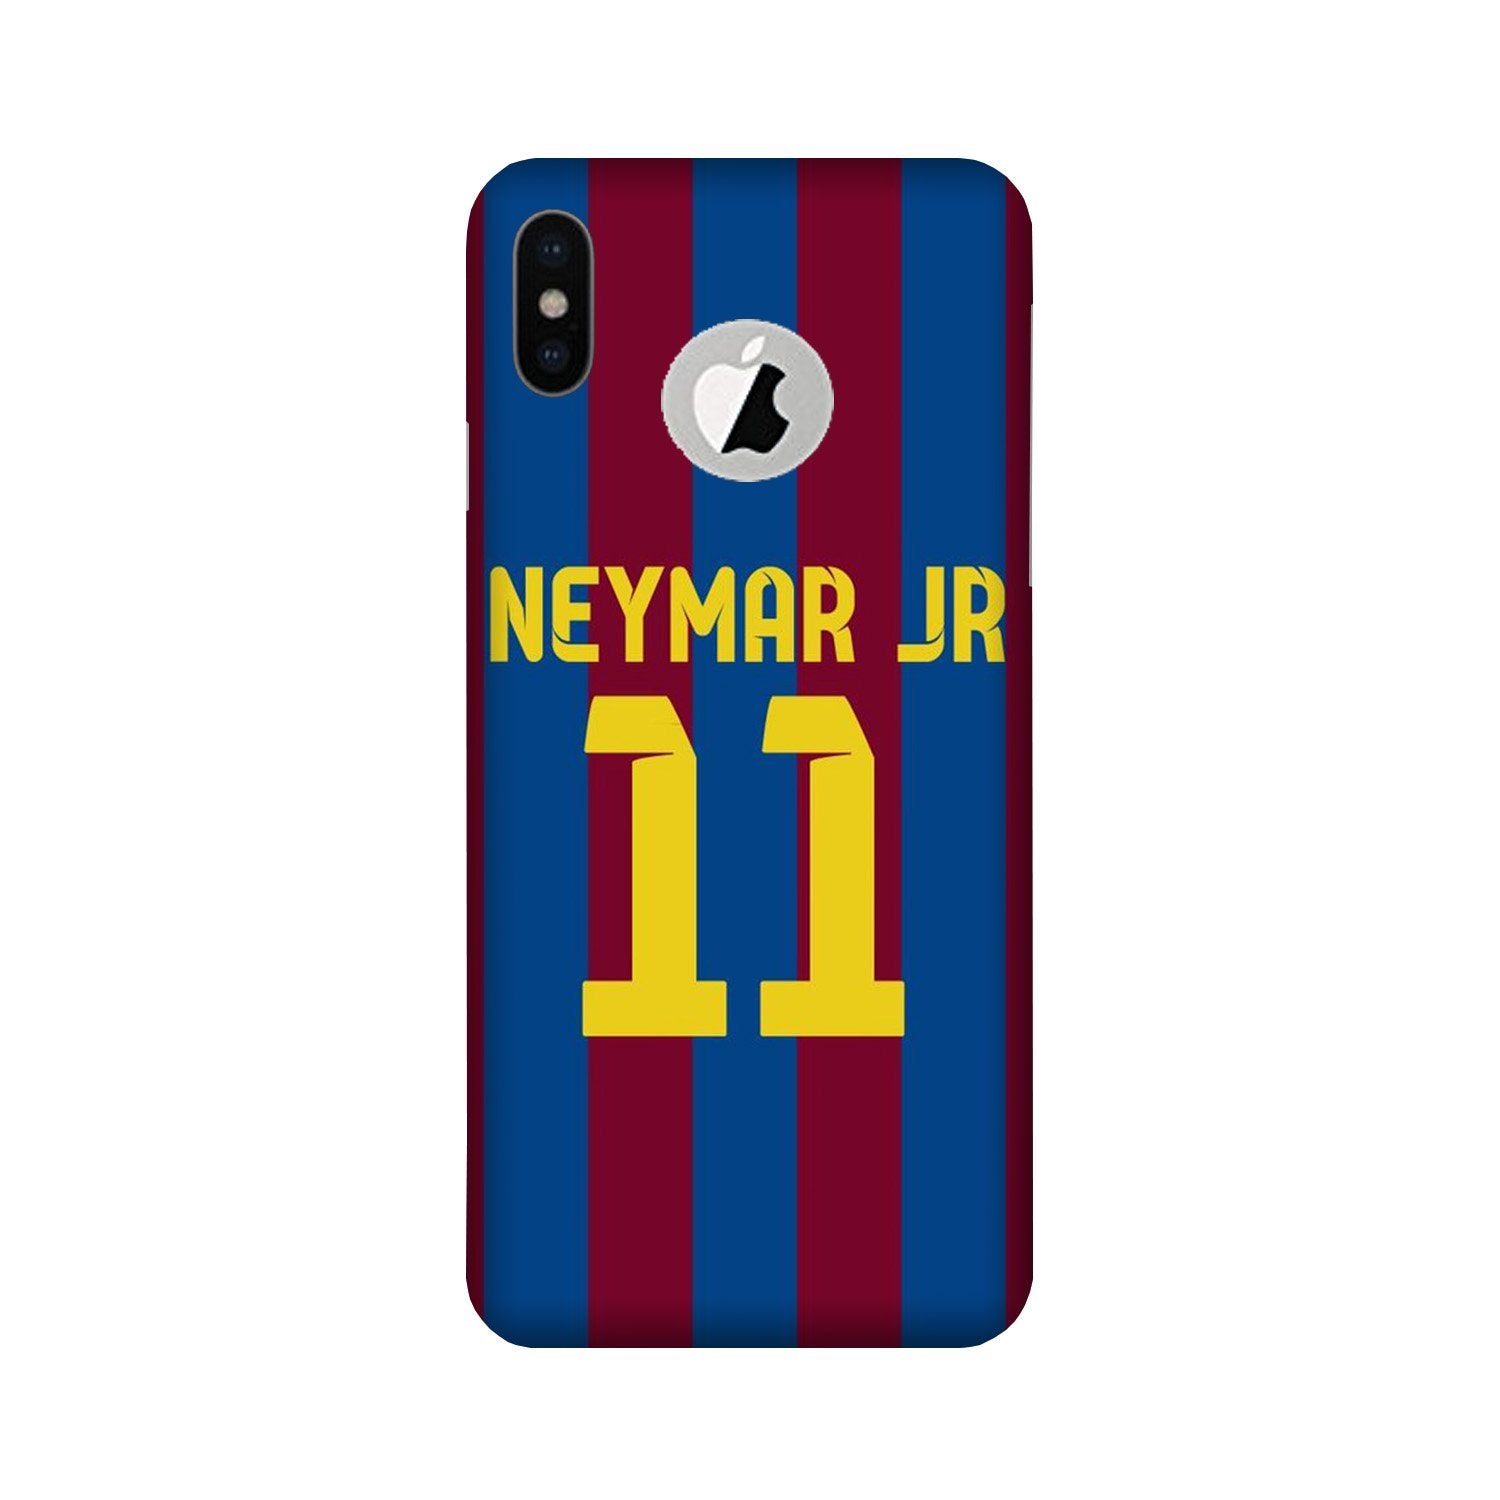 Neymar Jr Case for iPhone X logo cut(Design - 162)